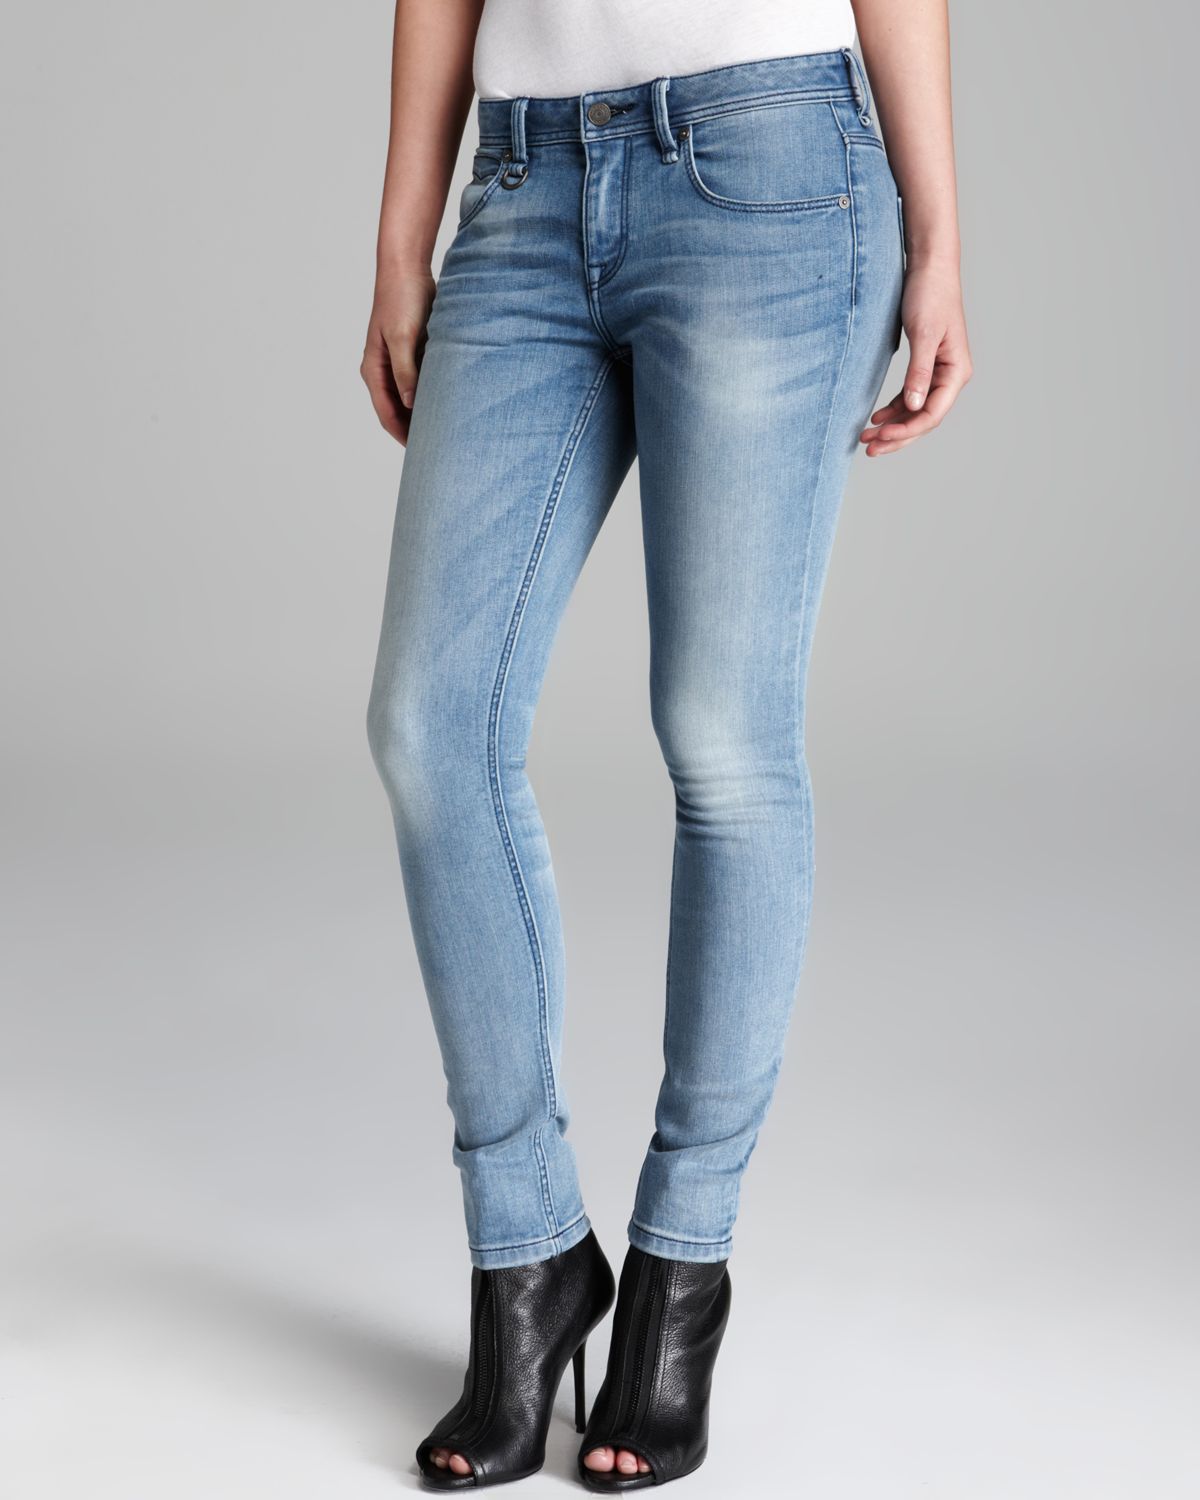 burberry skinny jeans